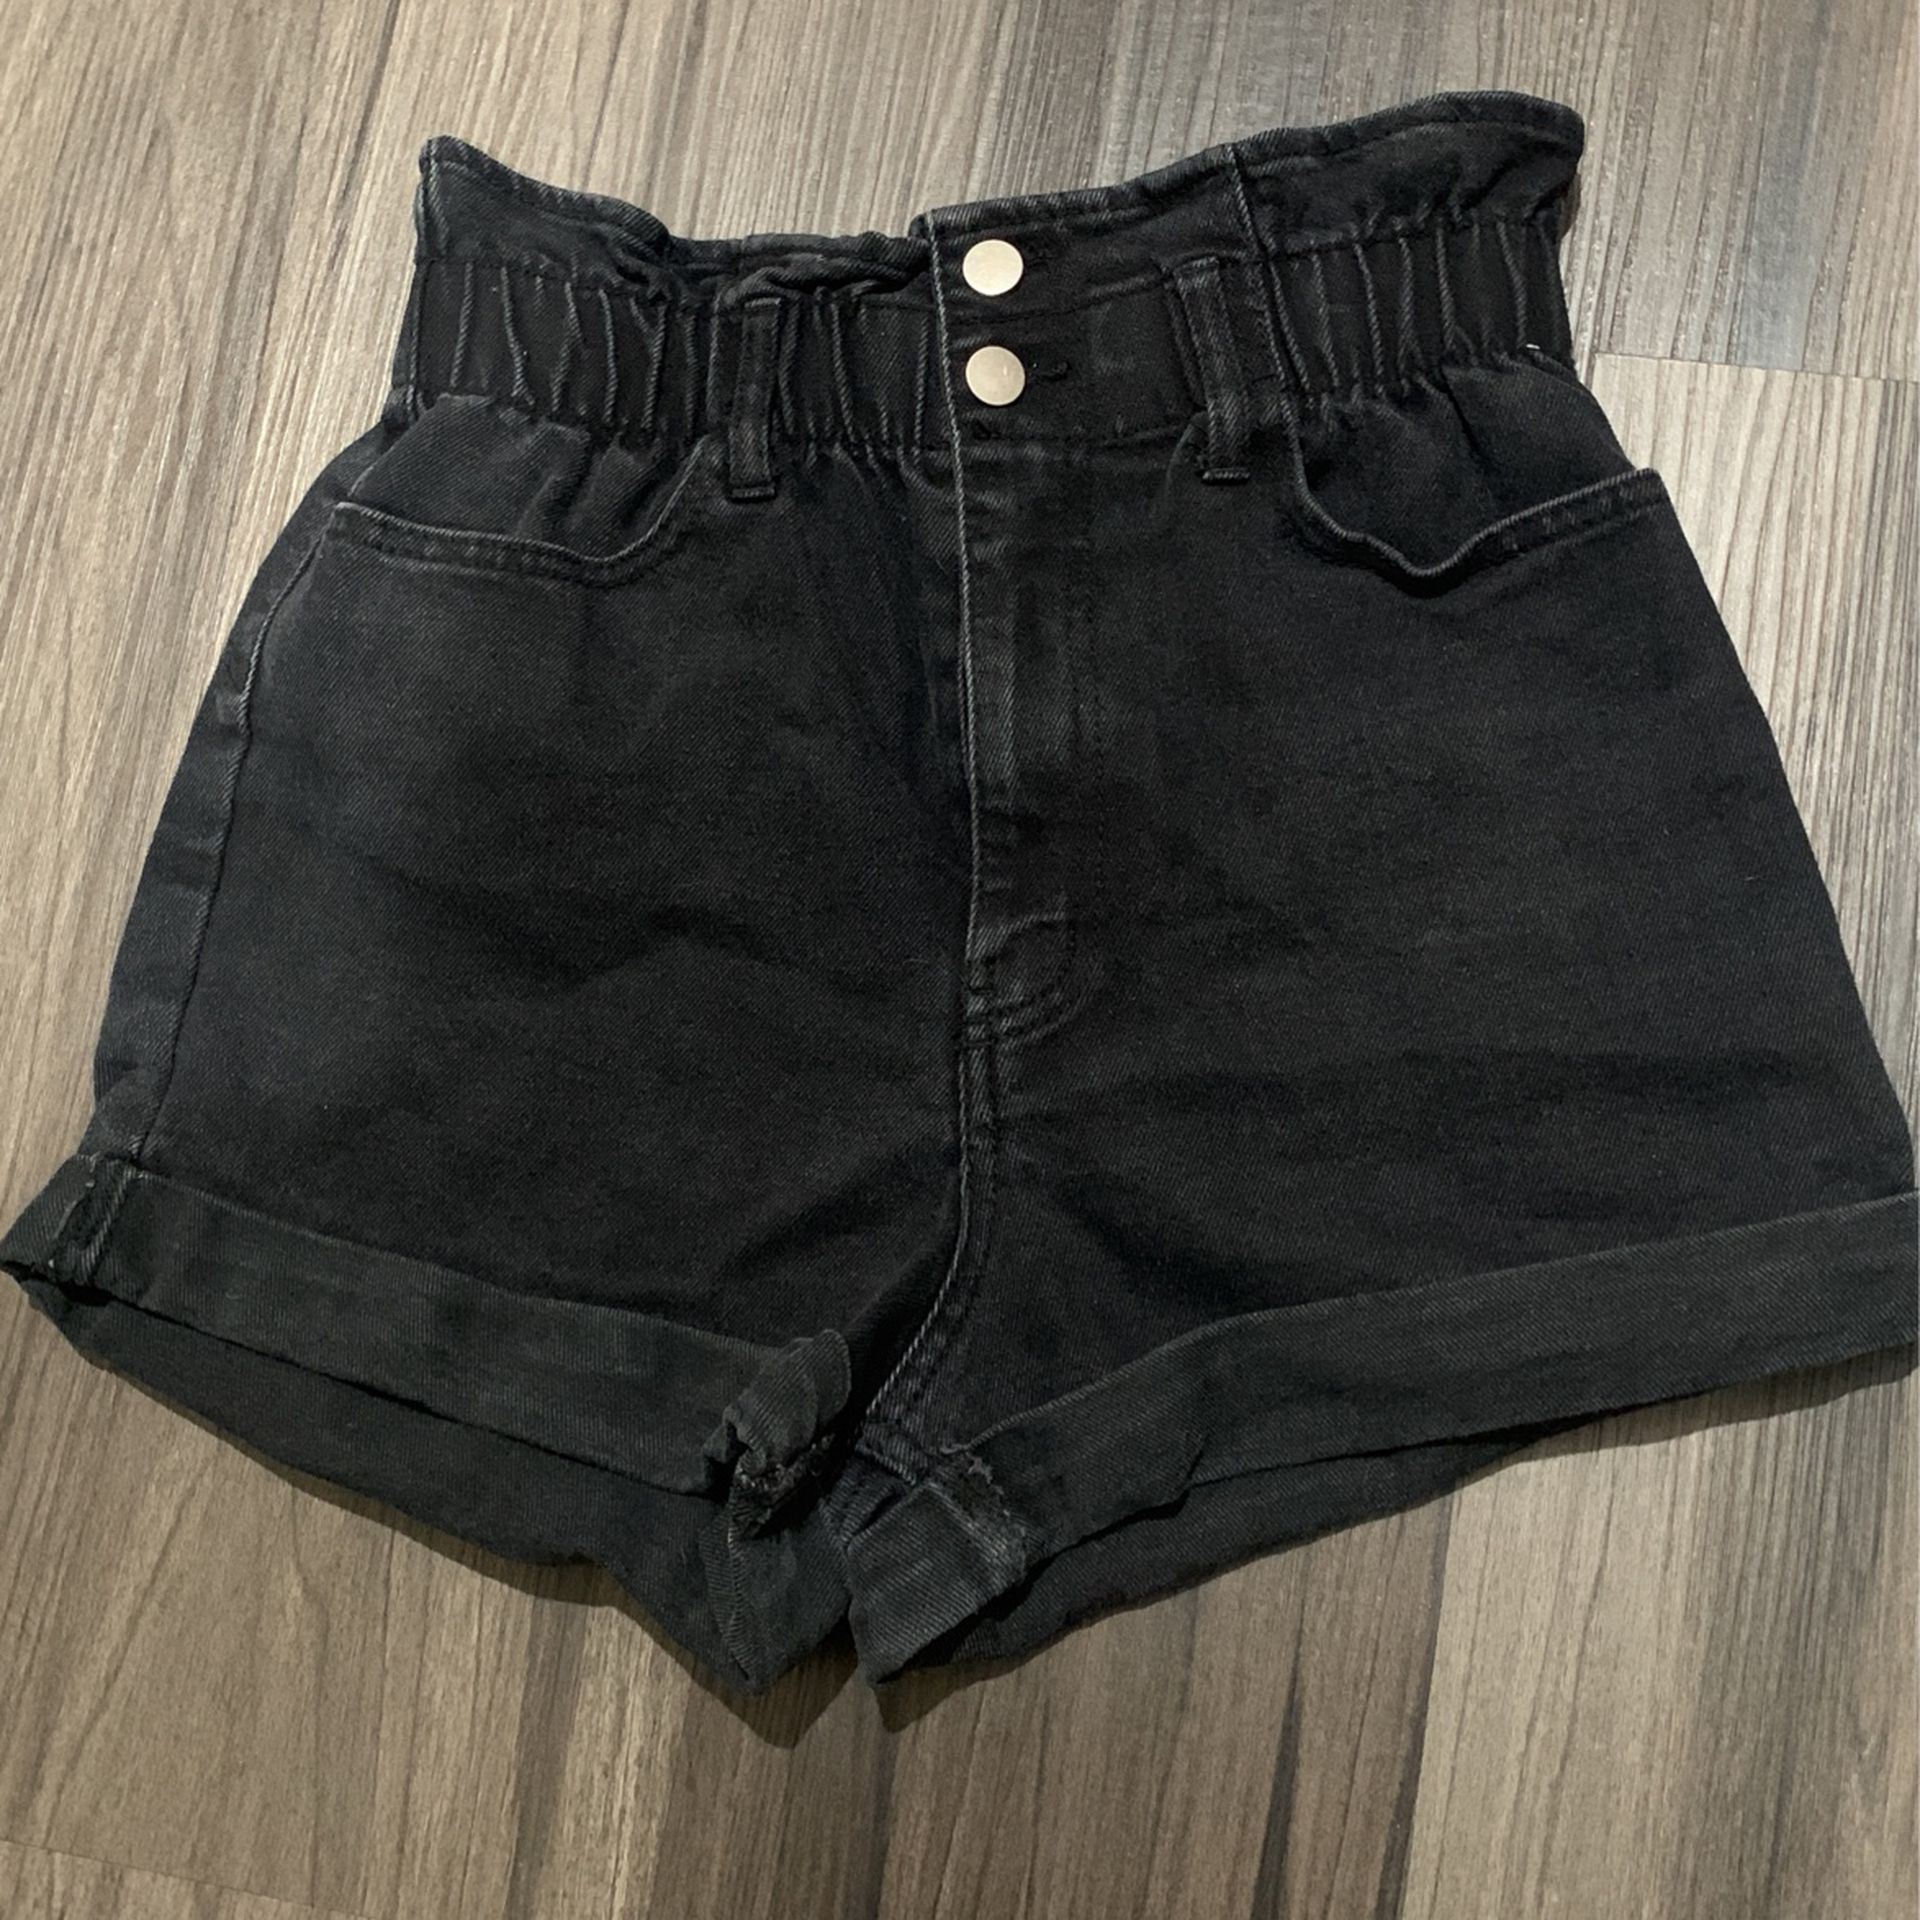 Paper Bag, black denim shorts